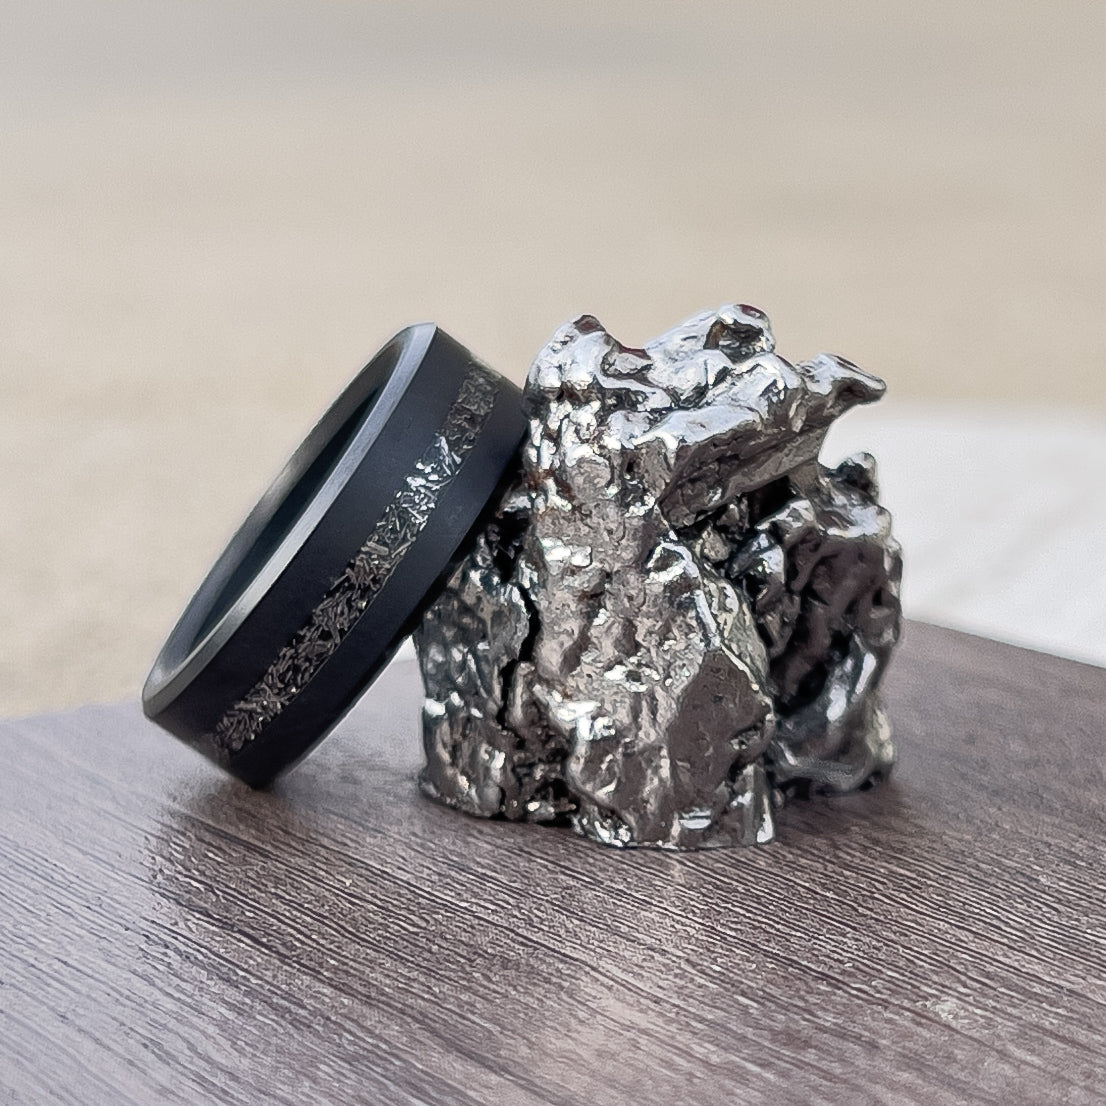 Black Diamond - Men’s Ring 8mm - Authentic Meteorite Inlay - ARES - Elysium Black Diamond